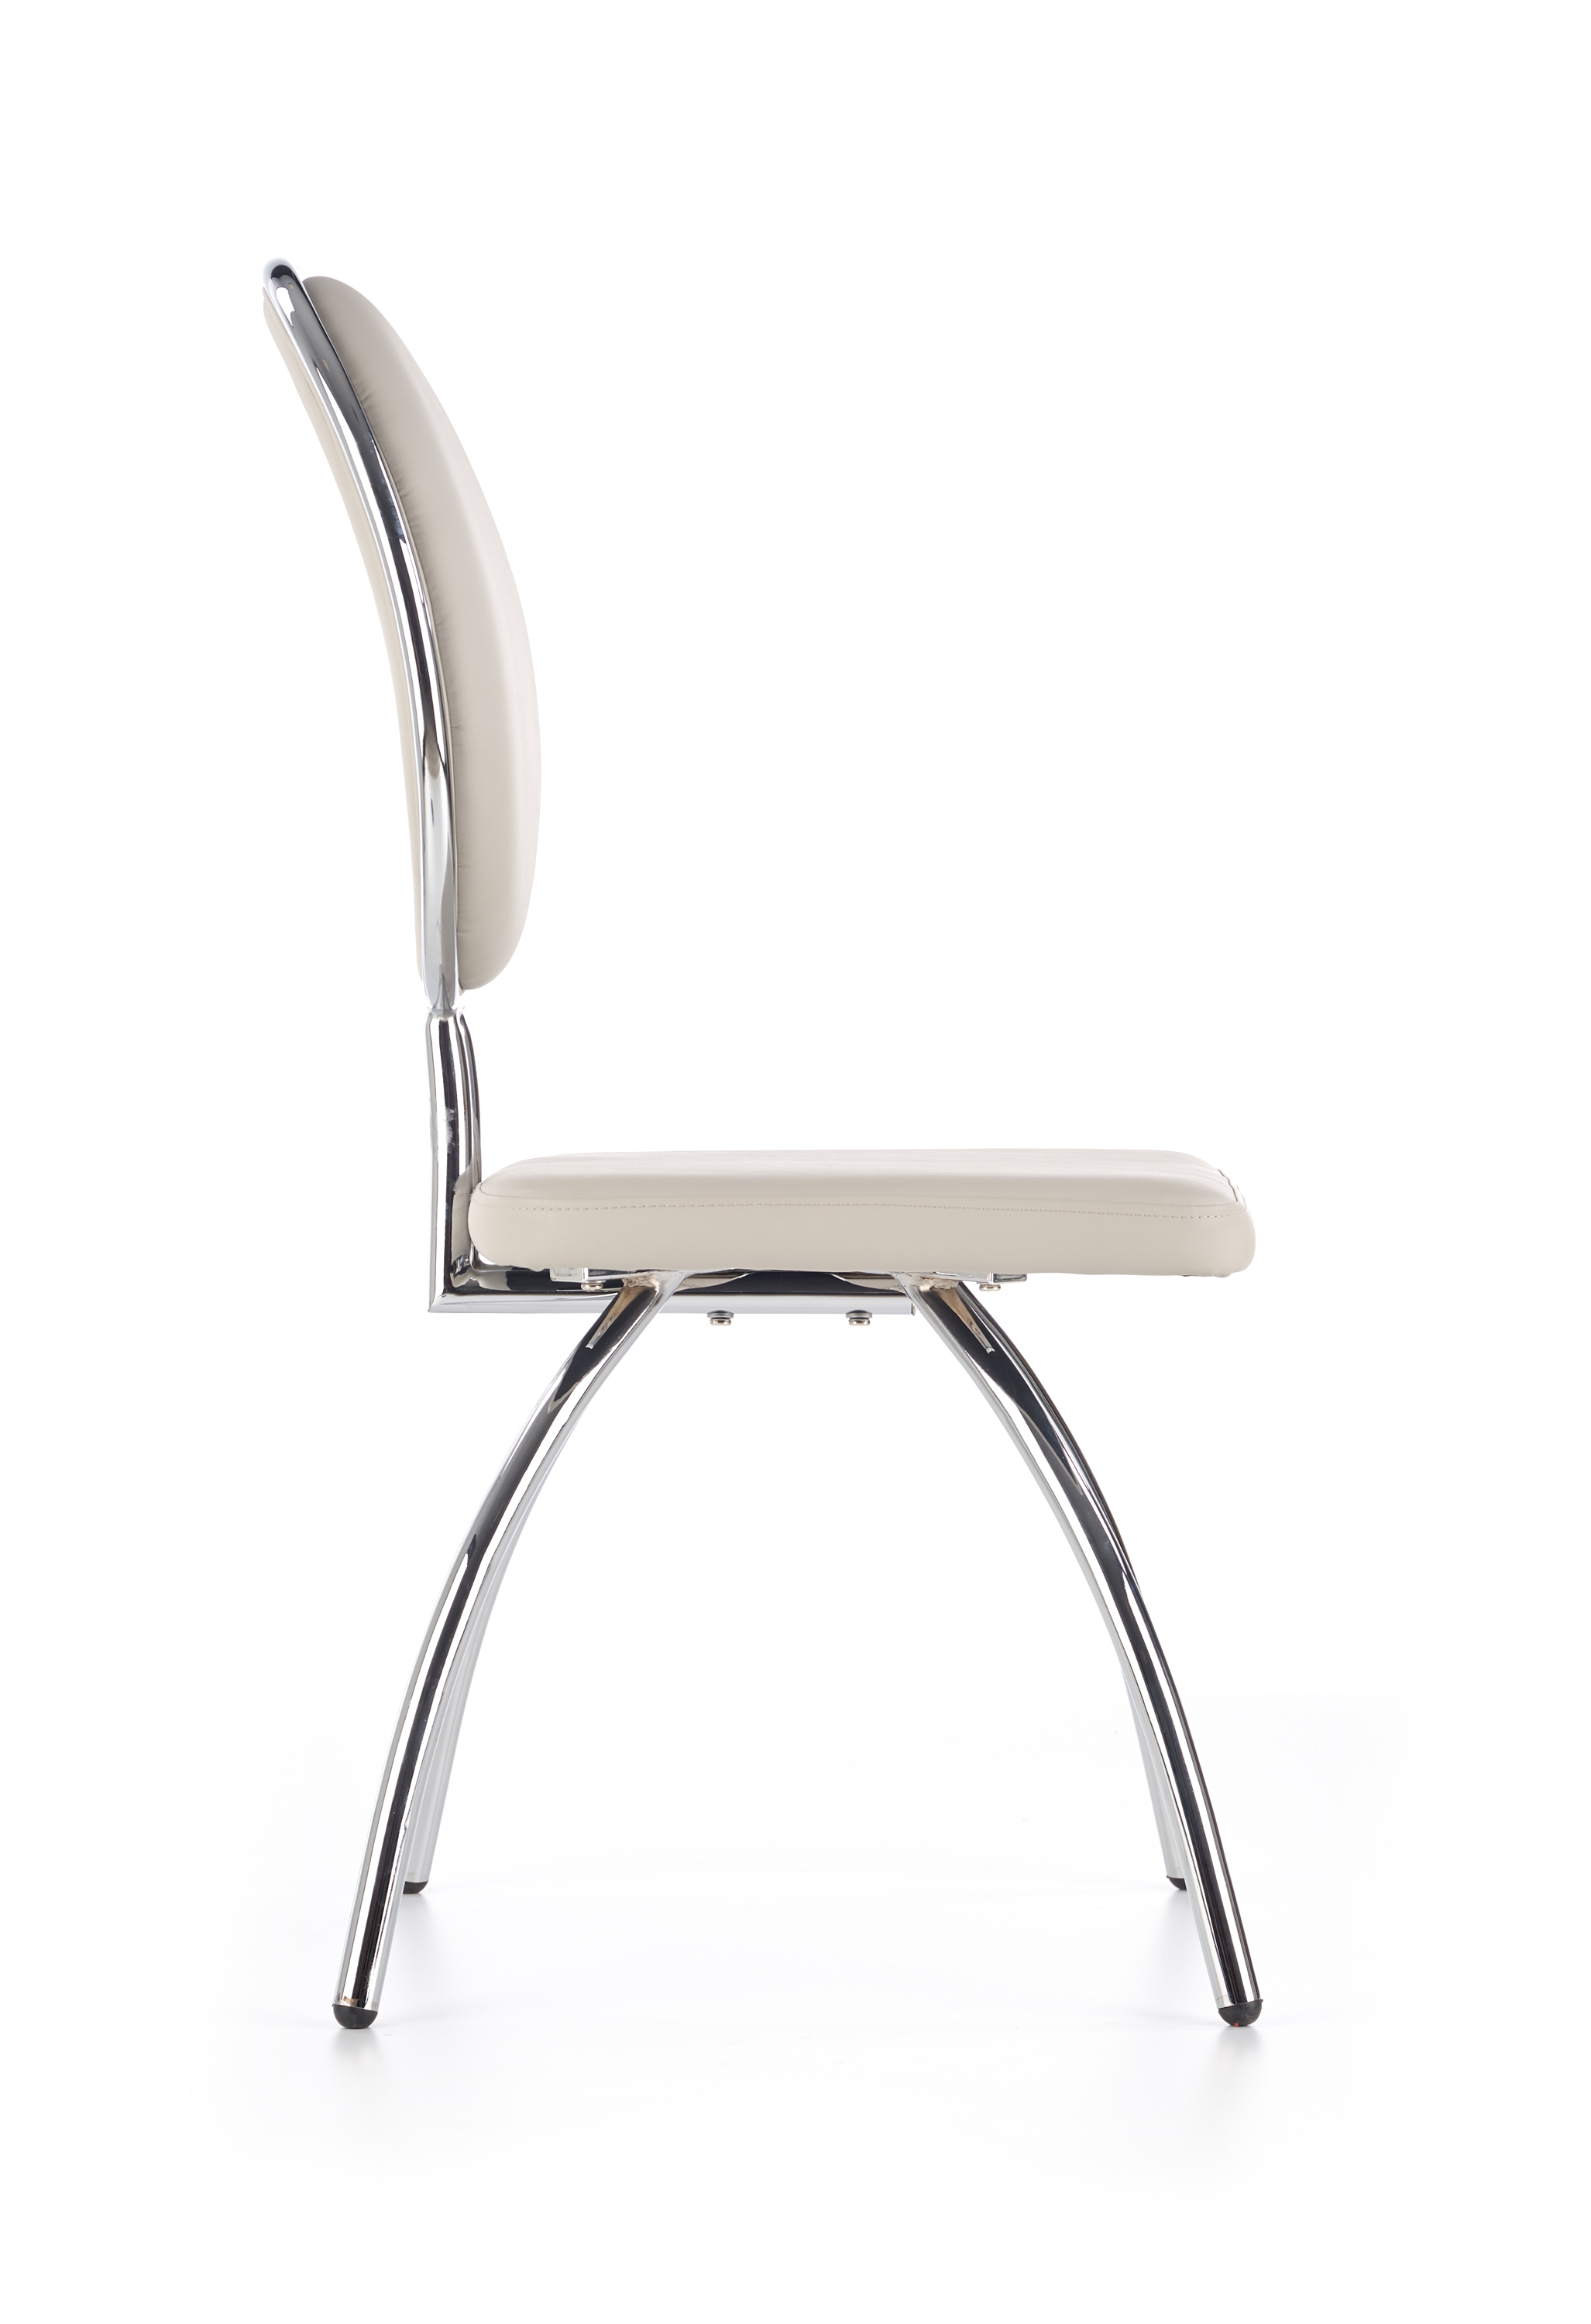 Jedálenská stolička K297 - sivá / chrómová Stolička k297 - svetlý popol / Chrom